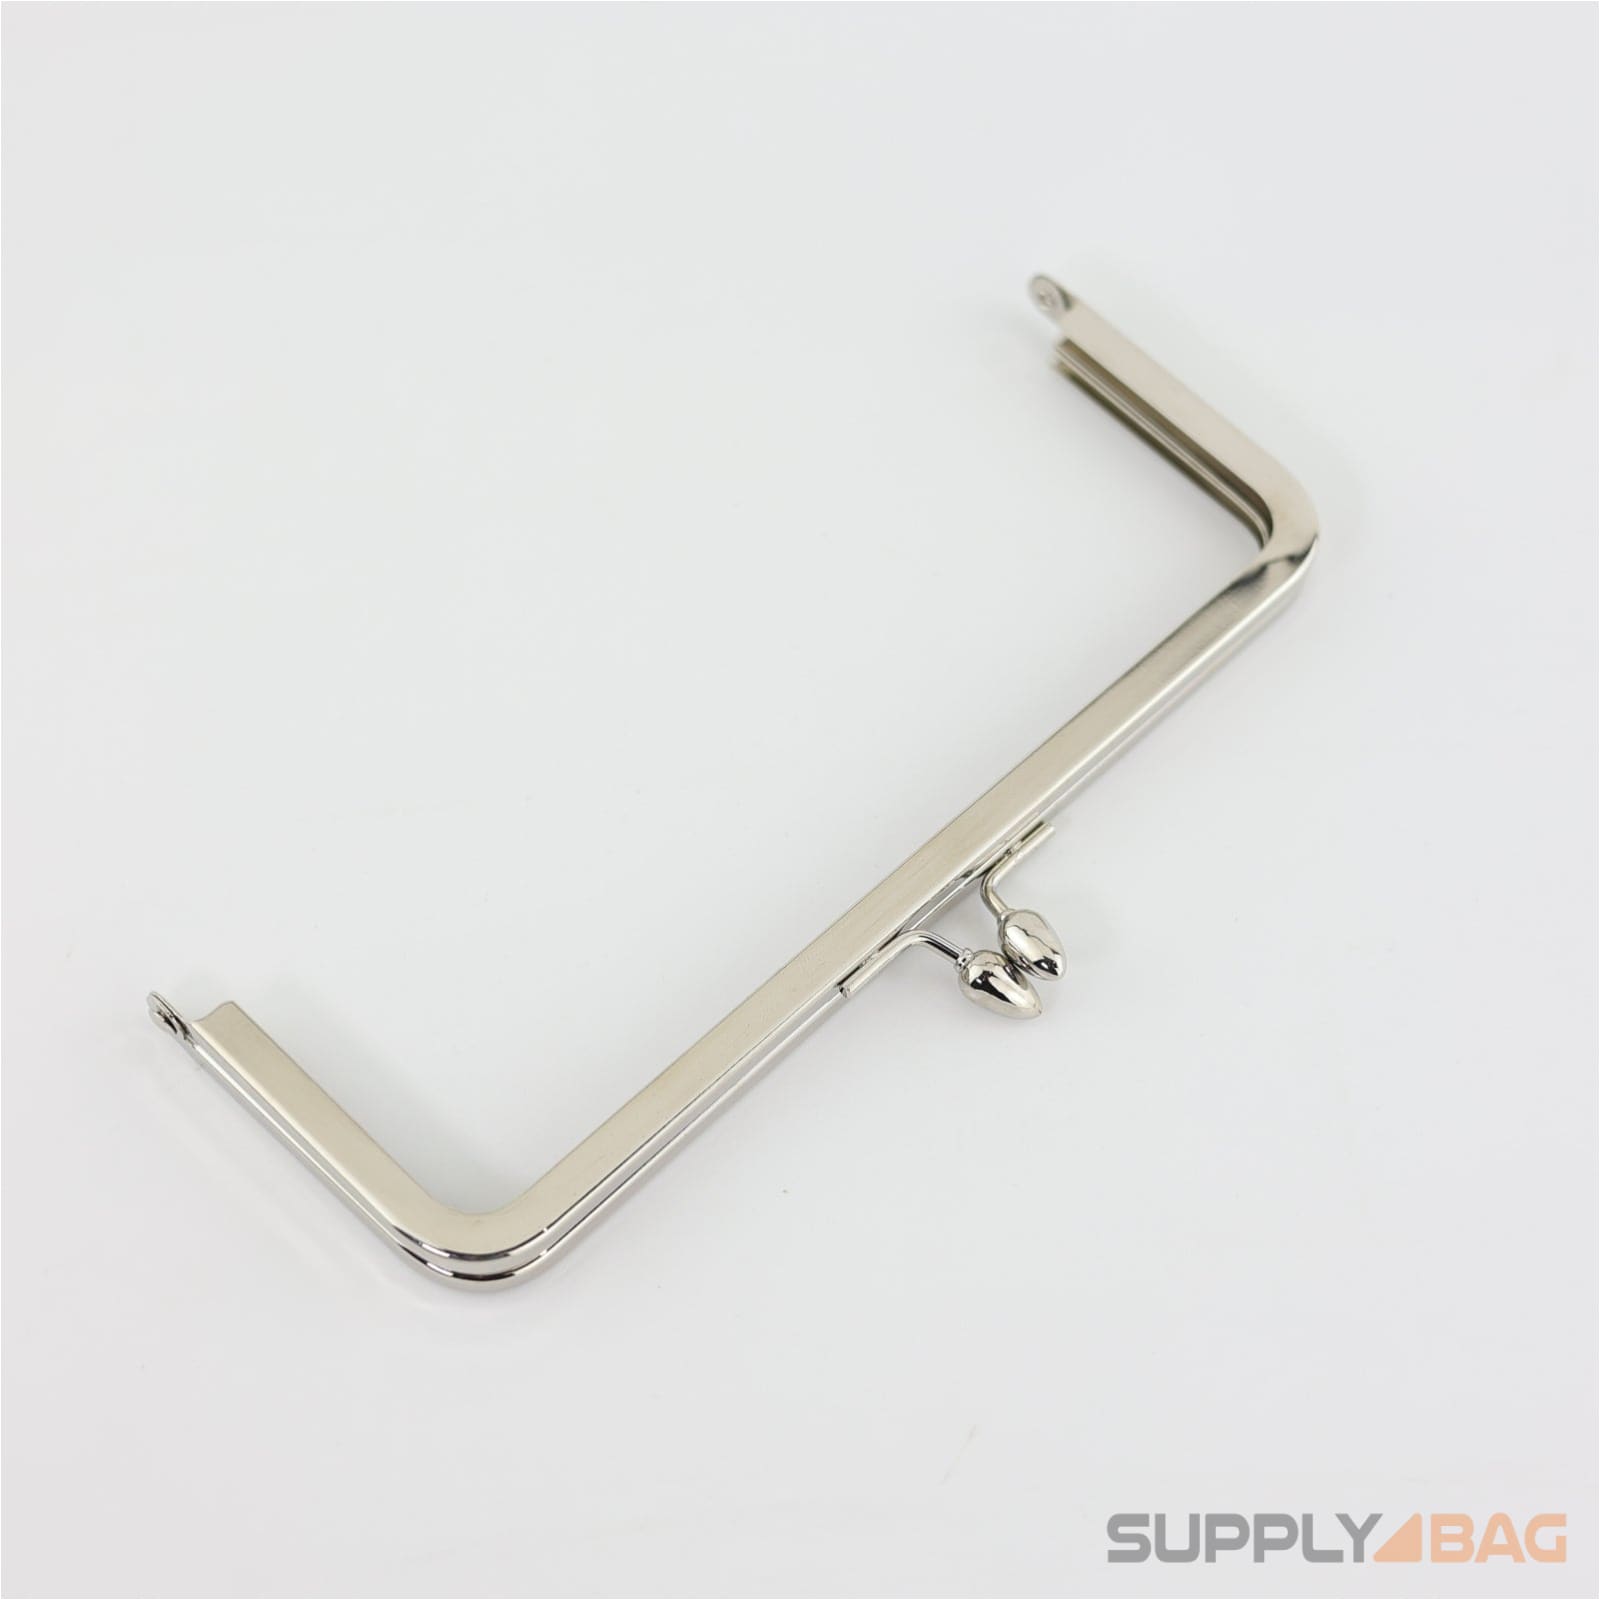 8 x 3 inch - teardrop clasp - silver metal purse frame